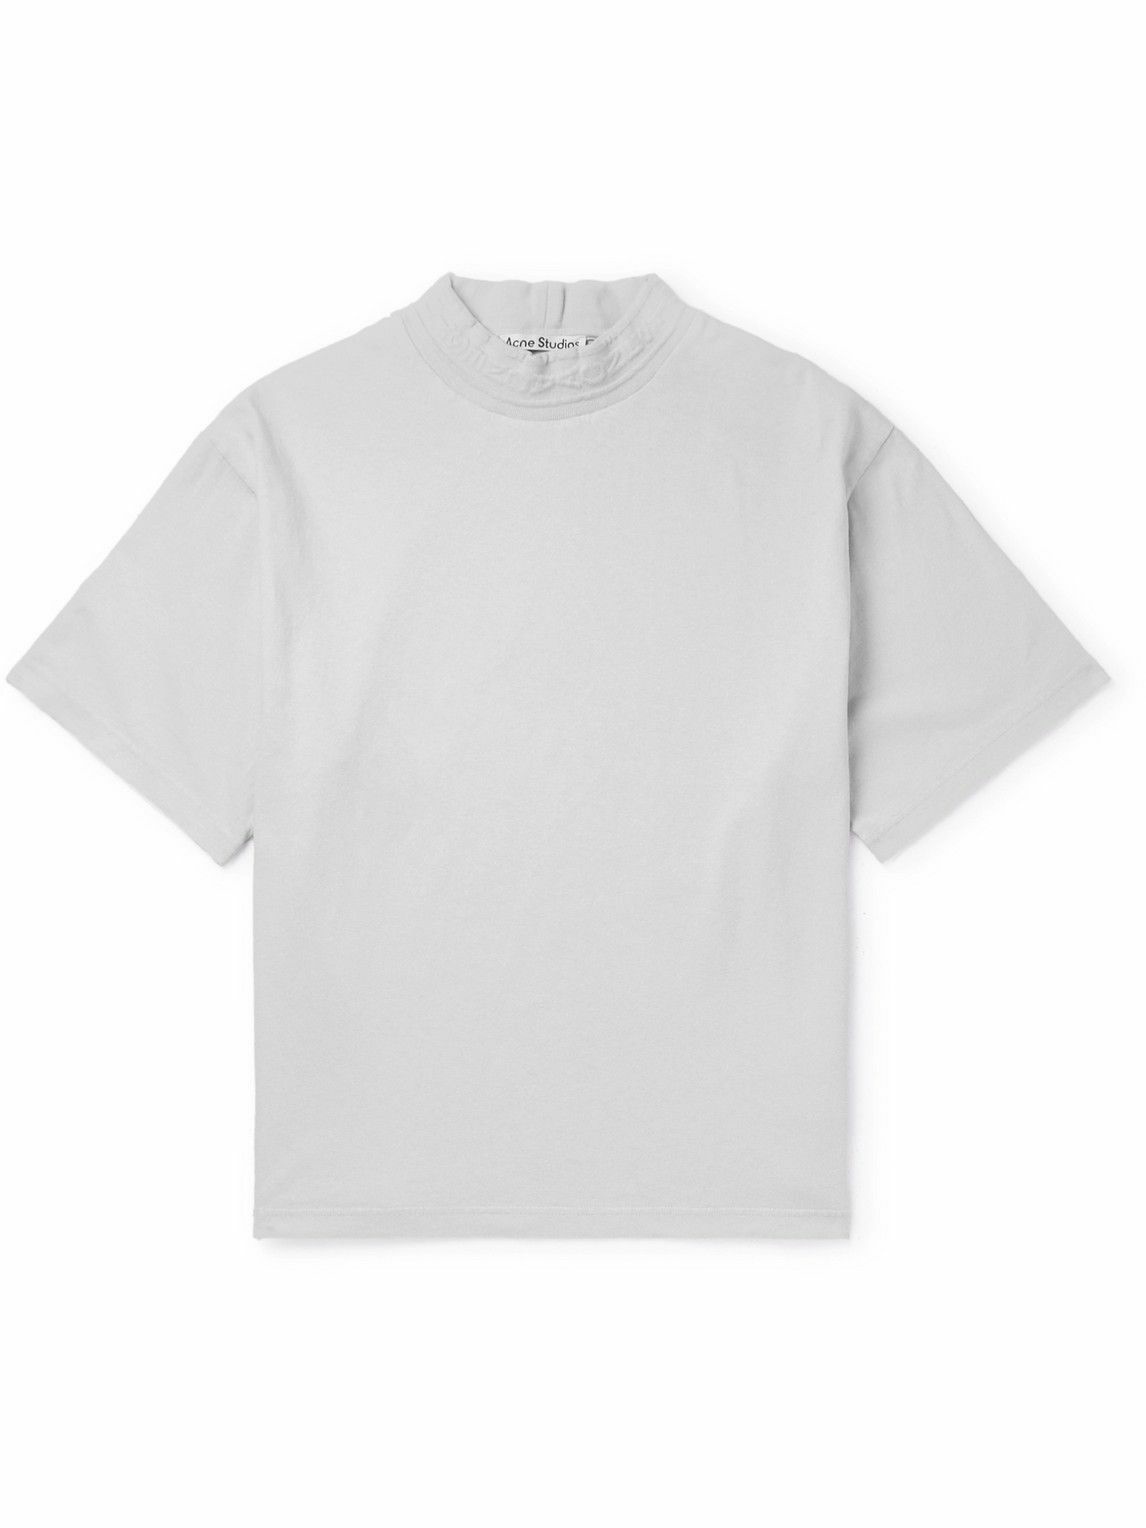 Acne Studios - Elco Chain Cotton-Jersey T-Shirt - Neutrals Acne Studios